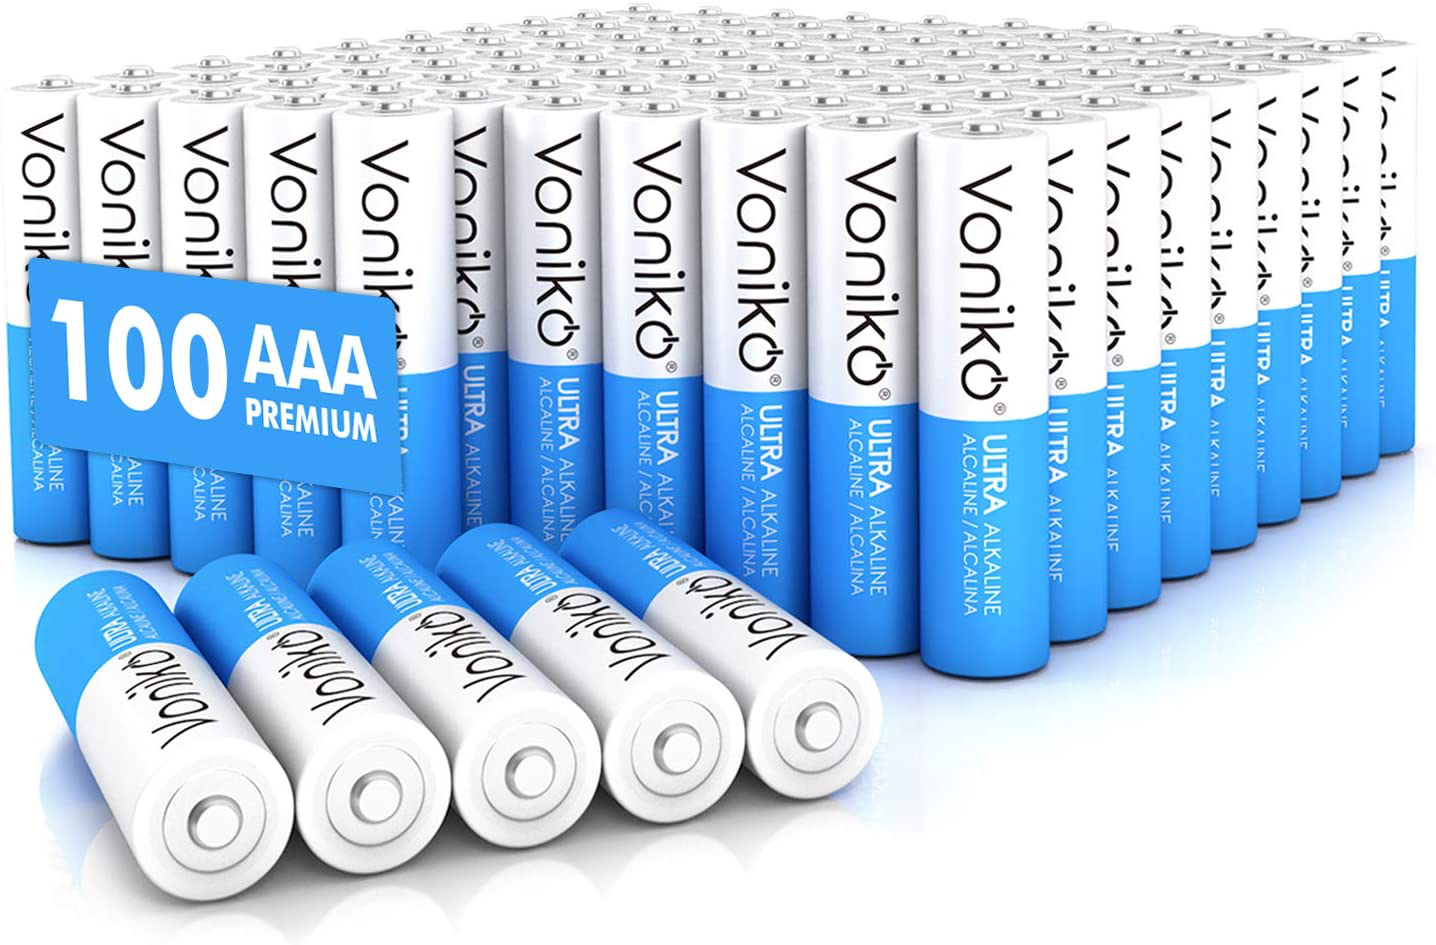 Premium Grade AAA Batteries Alkaline Triple a Battery - Ultra Long-Lasting, Leakproof 1.5V Batteries - 10-Year Shelf Life